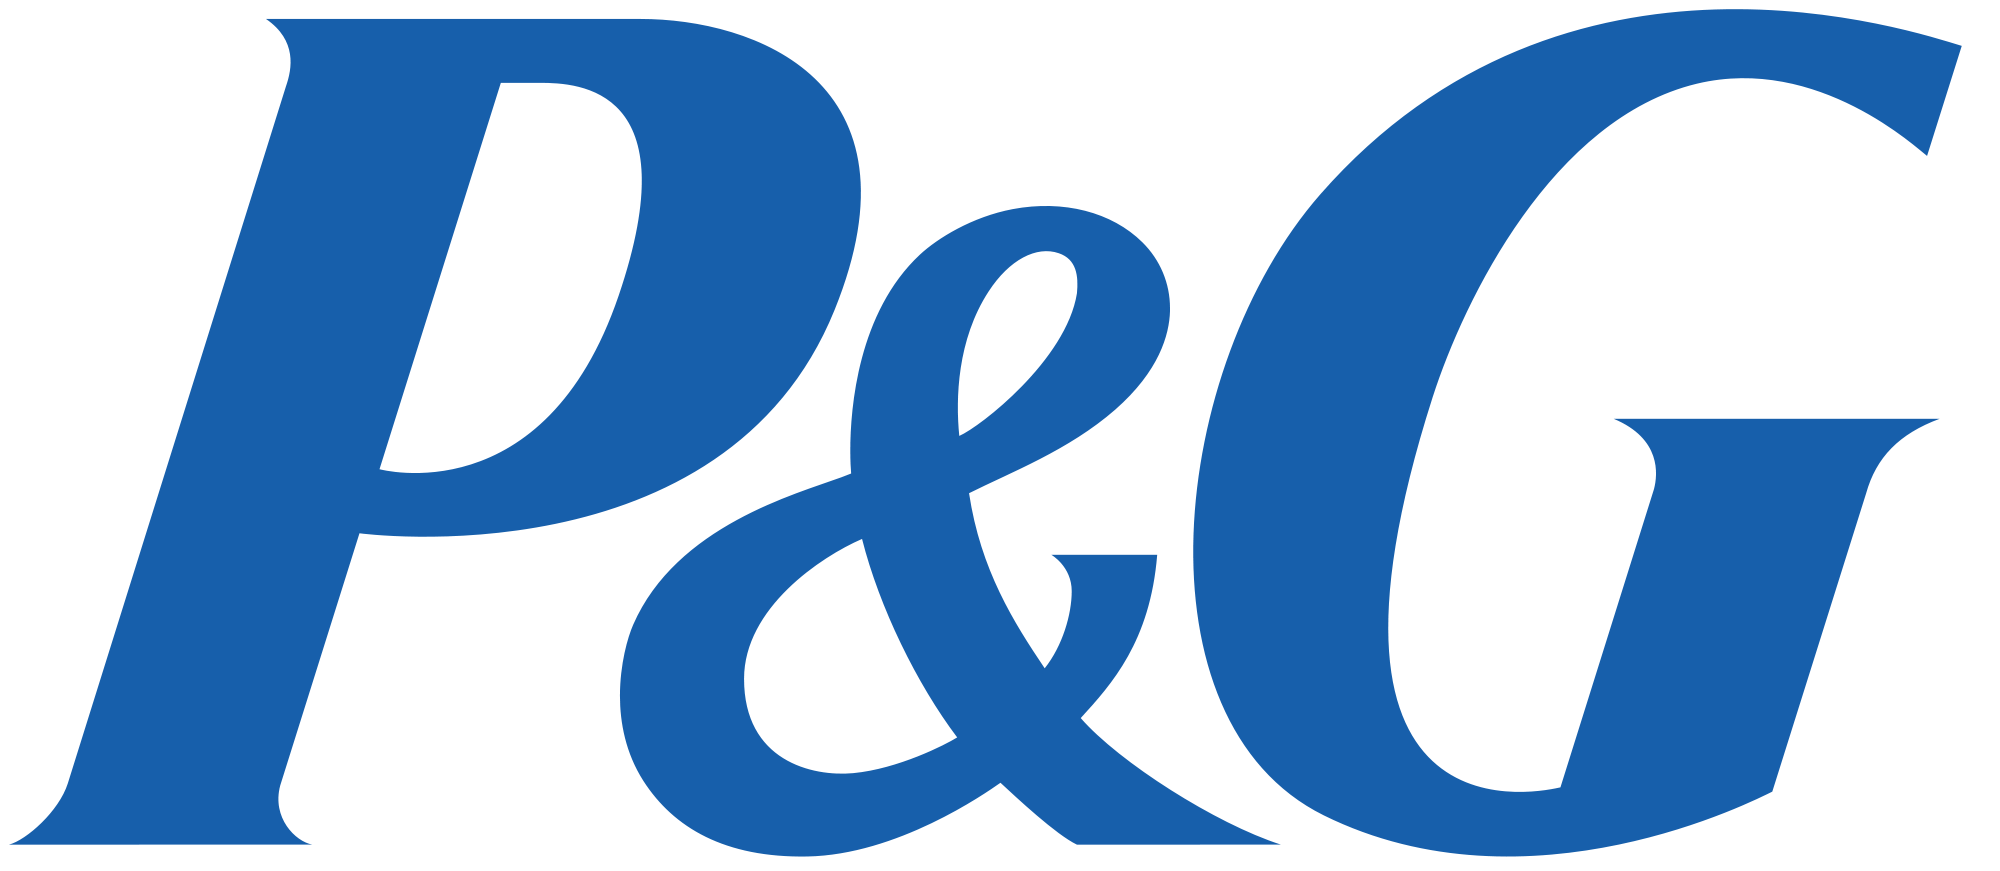 P&G Logo - Image - P&G logo.png | Logopedia | FANDOM powered by Wikia